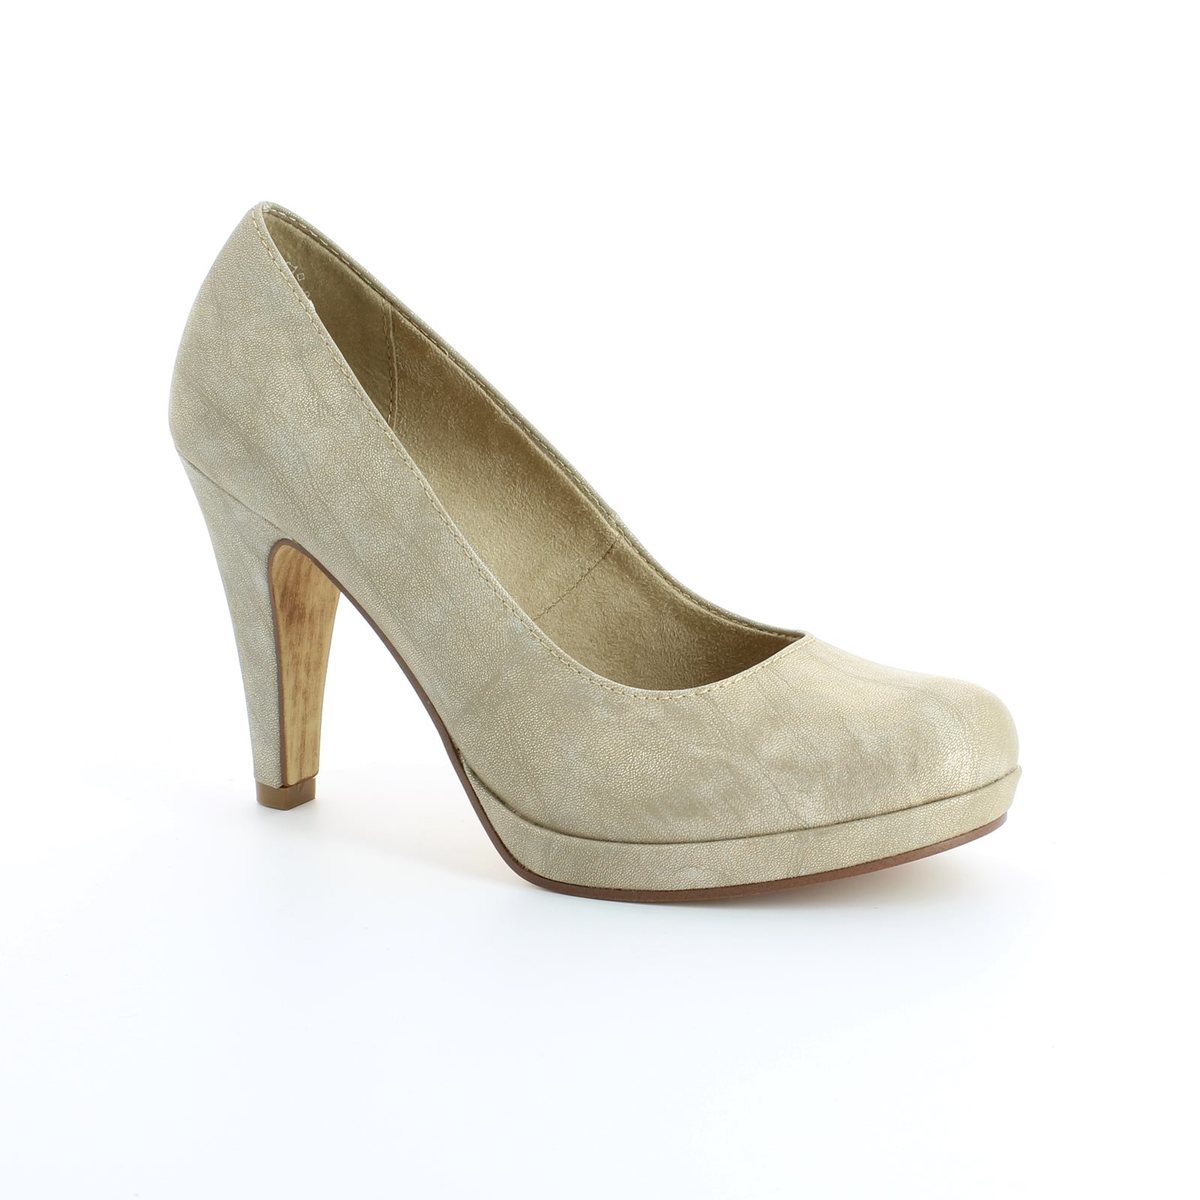 22426-940 Gold Metallic high-heeled shoes